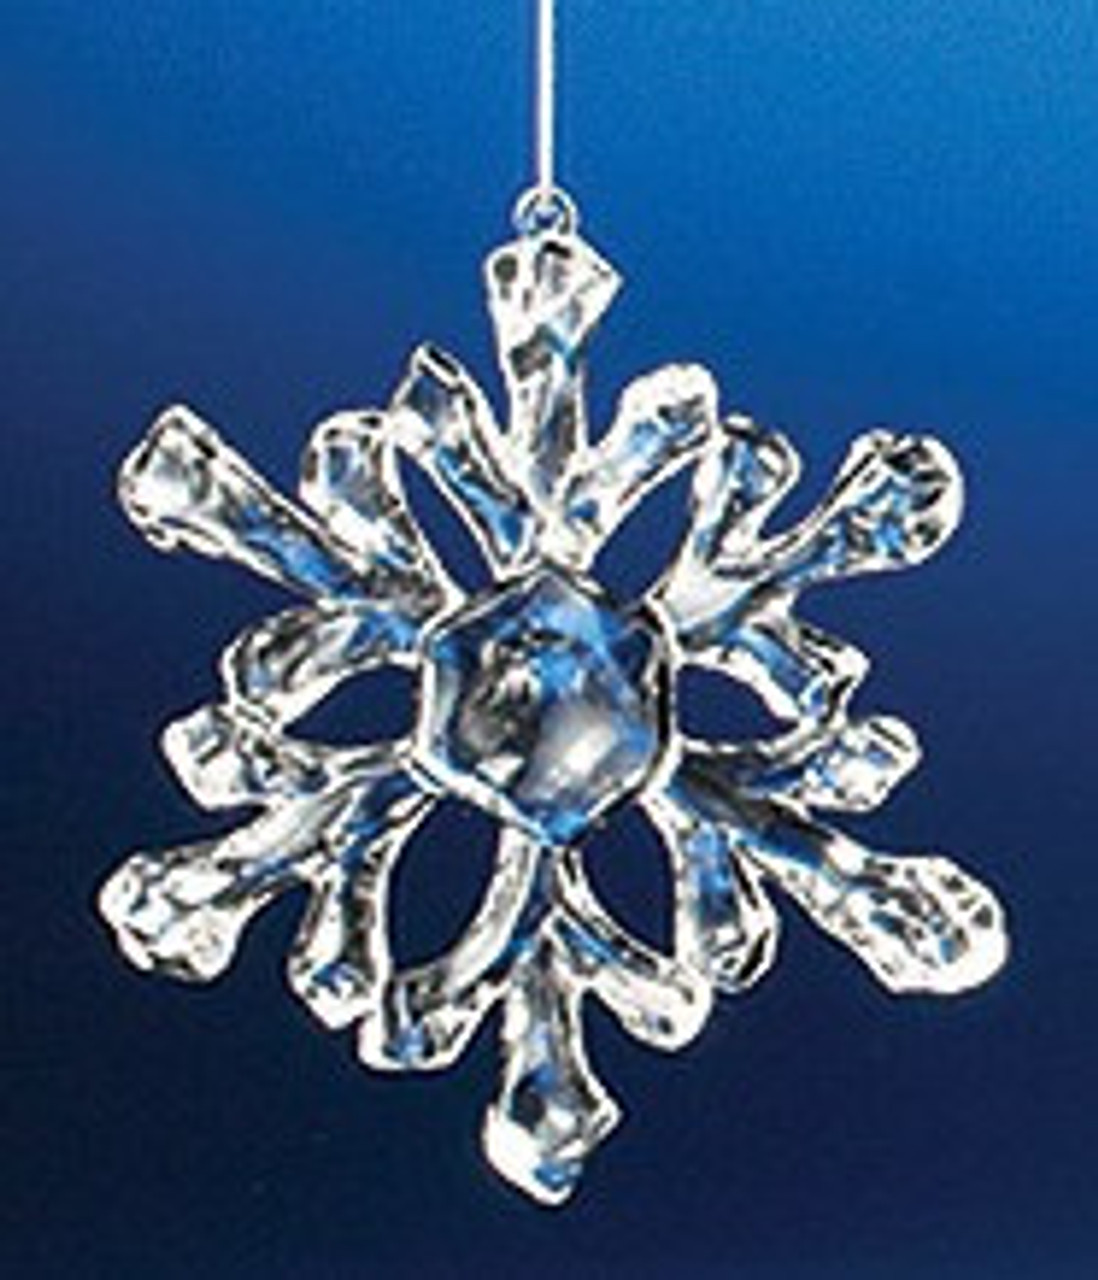 Small round snowflake ornament